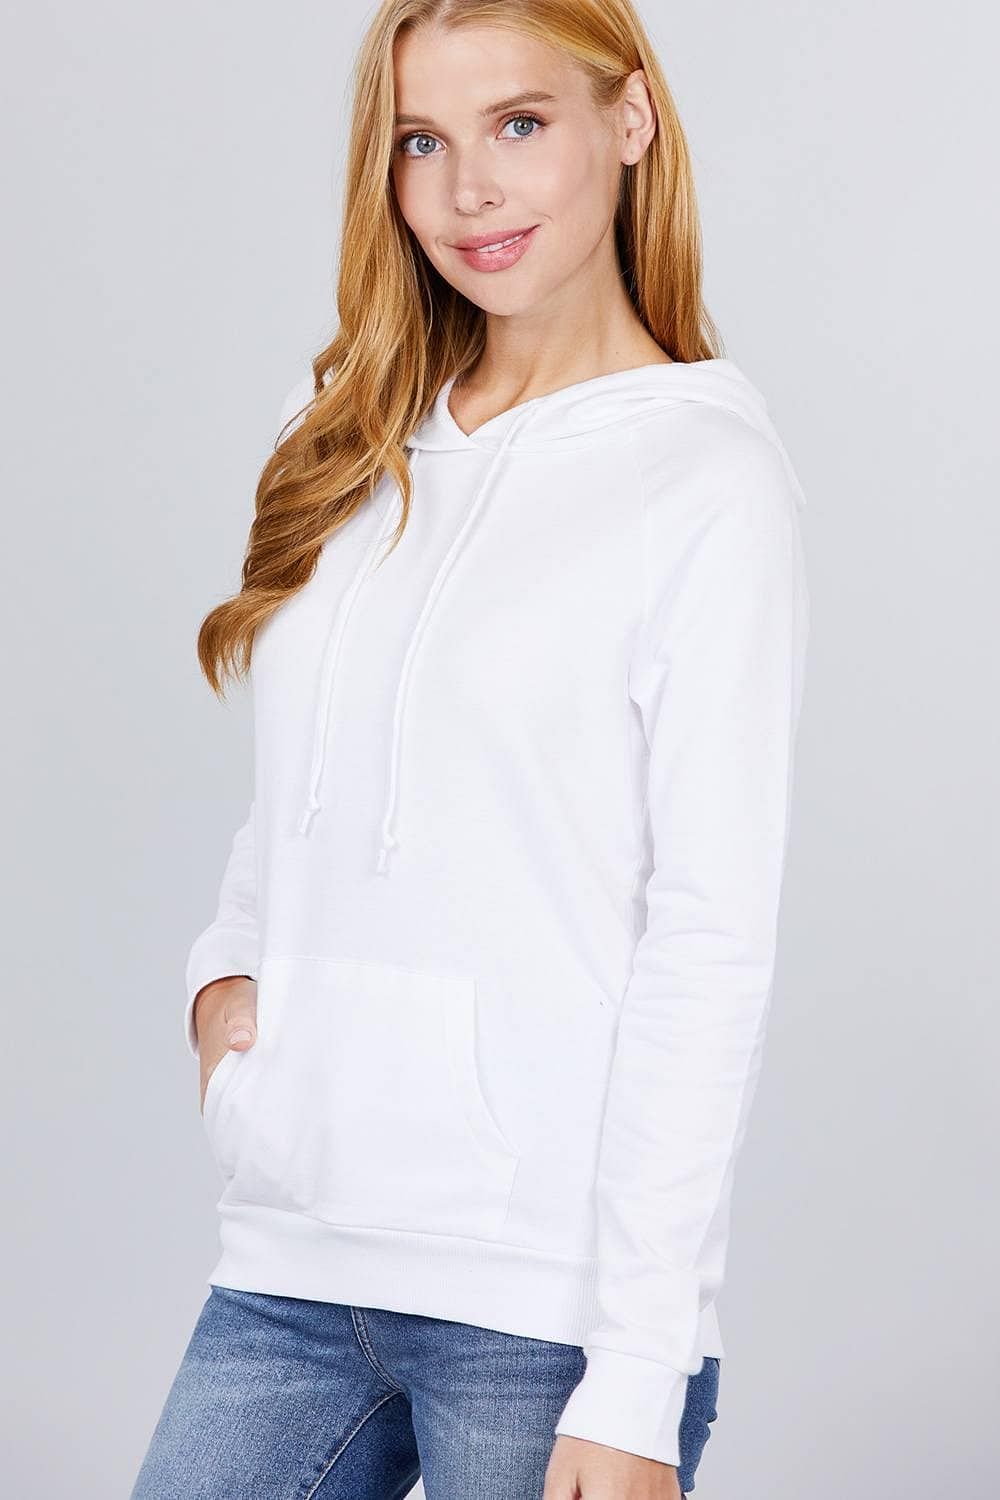 Pure White French Terry Long Sleeve Sweatshirt - Shopping Therapy M Sweatshirt